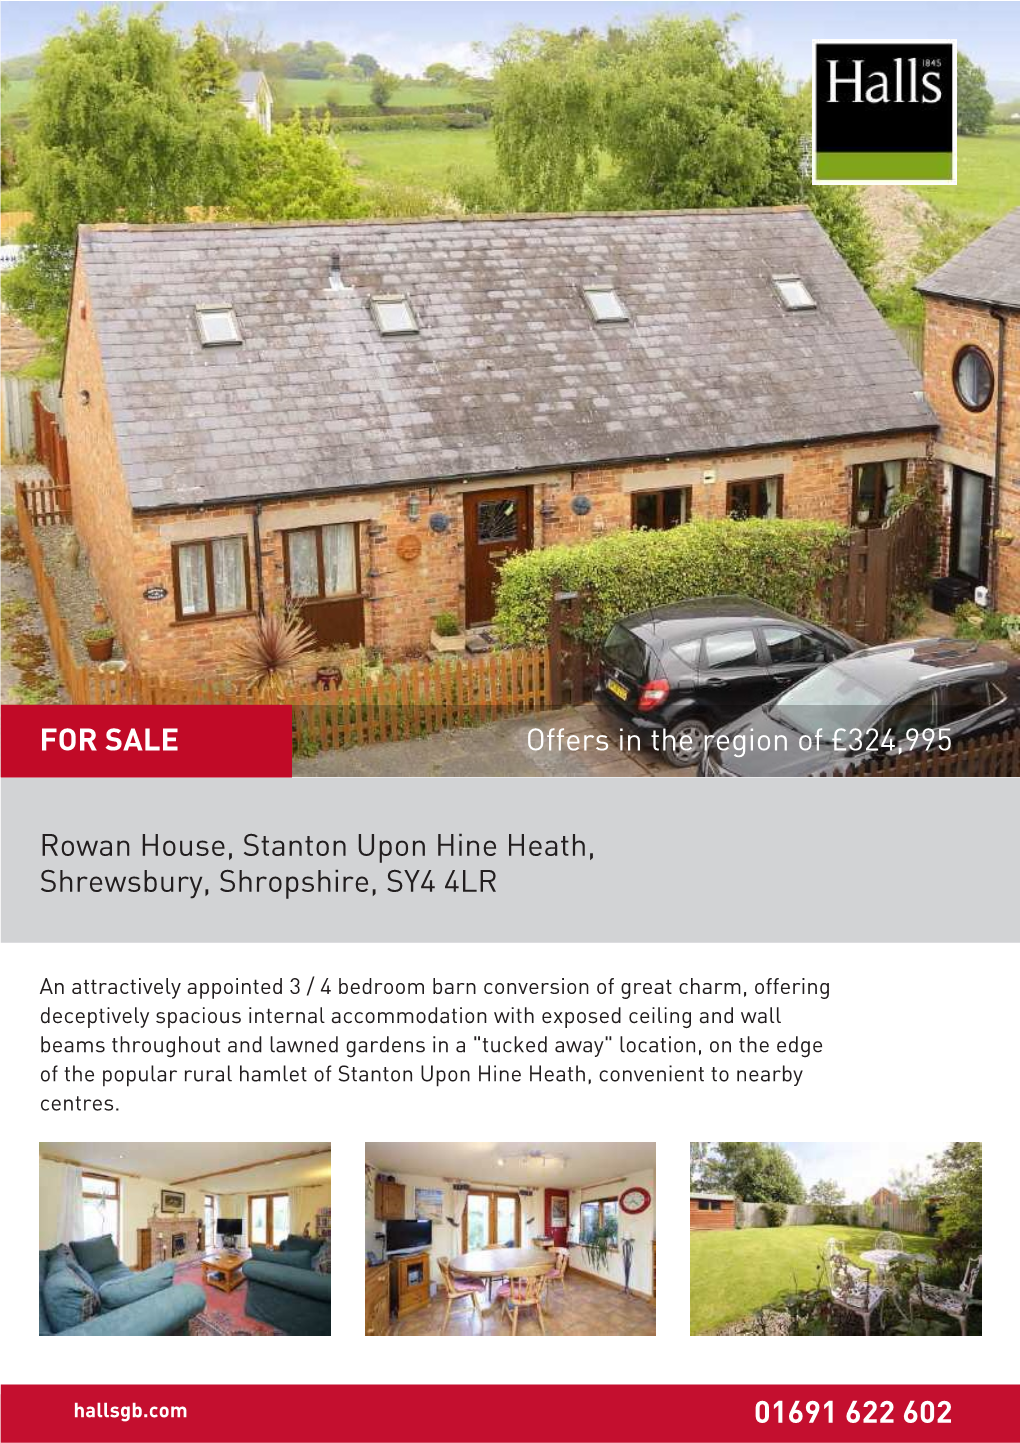 Rowan House, Stanton Upon Hine Heath, Shrewsbury, Shropshire, SY4 4LR 01691 622 602 Offers in the Region of £324,995 for SALE